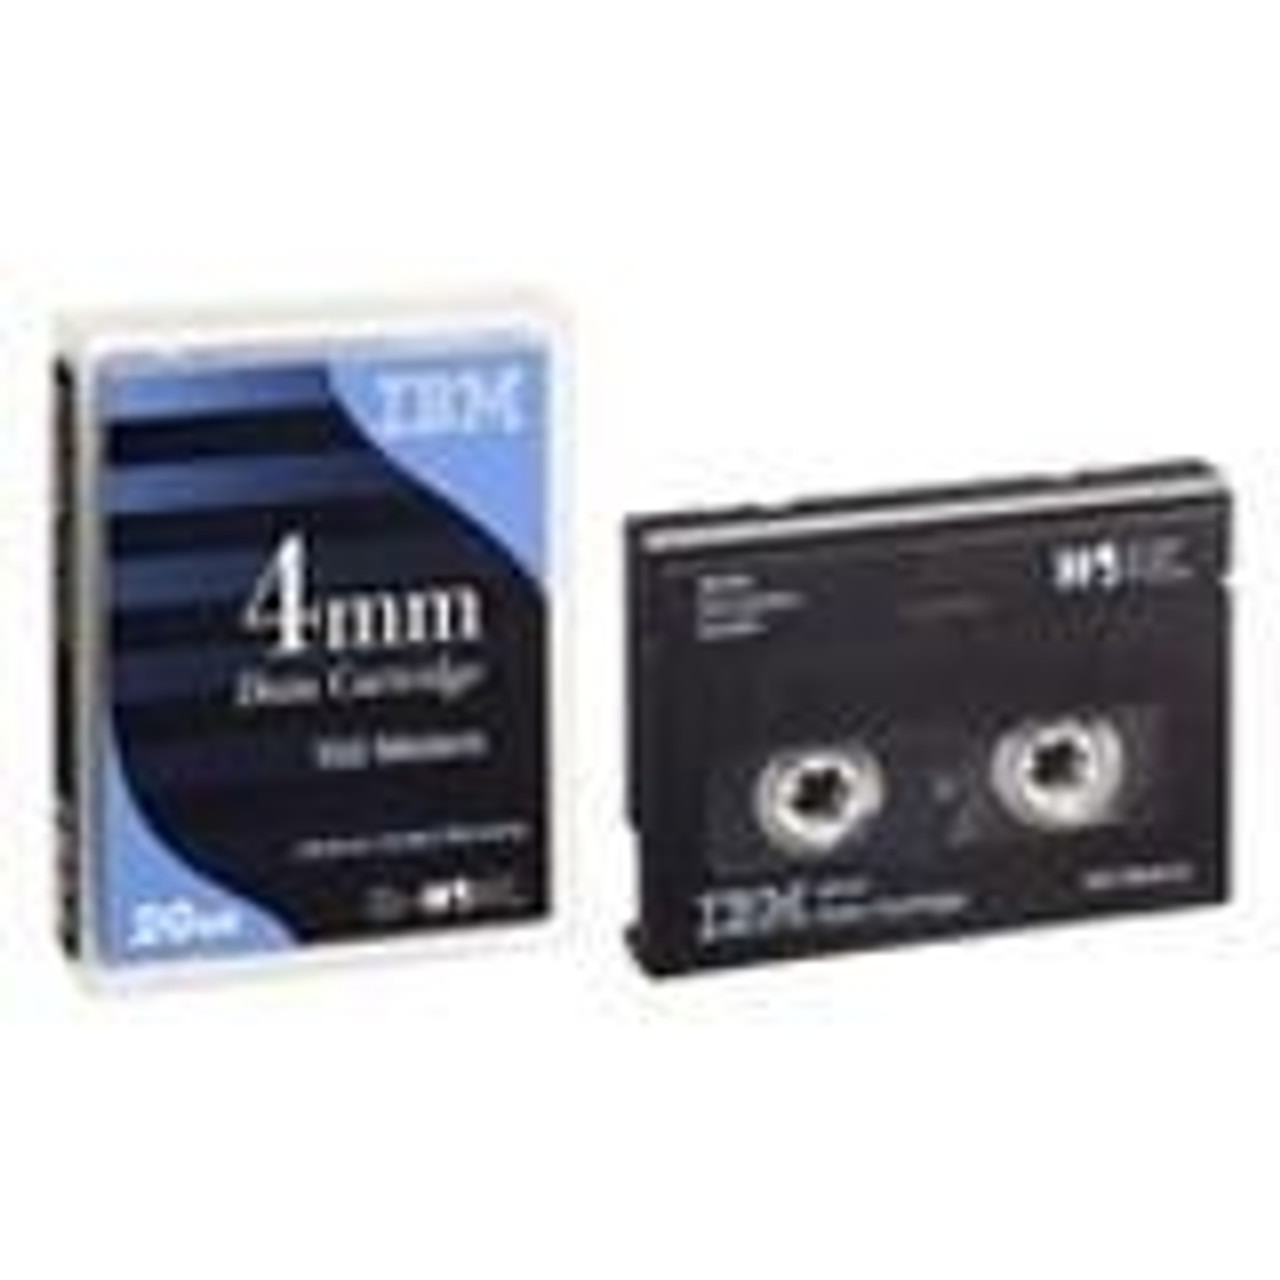 4 8GB IBM8191151 4MM DDS Cartridge 120M Data Cartridges Category: Tape Media 